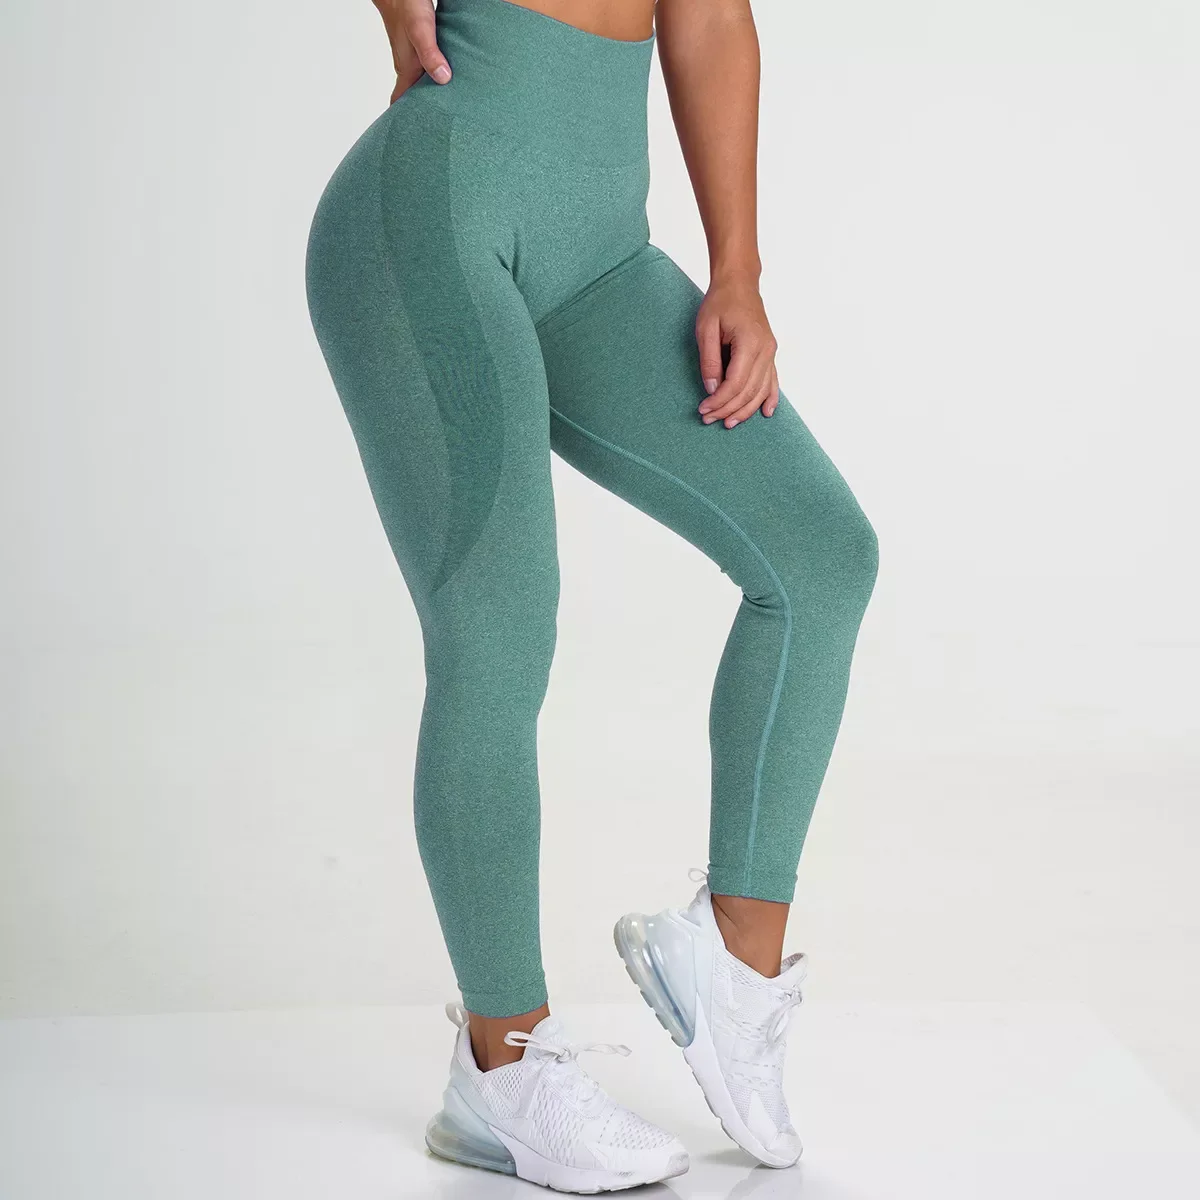 

NEW IN Bubble Butt Leggings Women Push Up Anti Cellulit Ultra Thin Fitness Legins Workout Gym Legging High Waist Pants Dropship